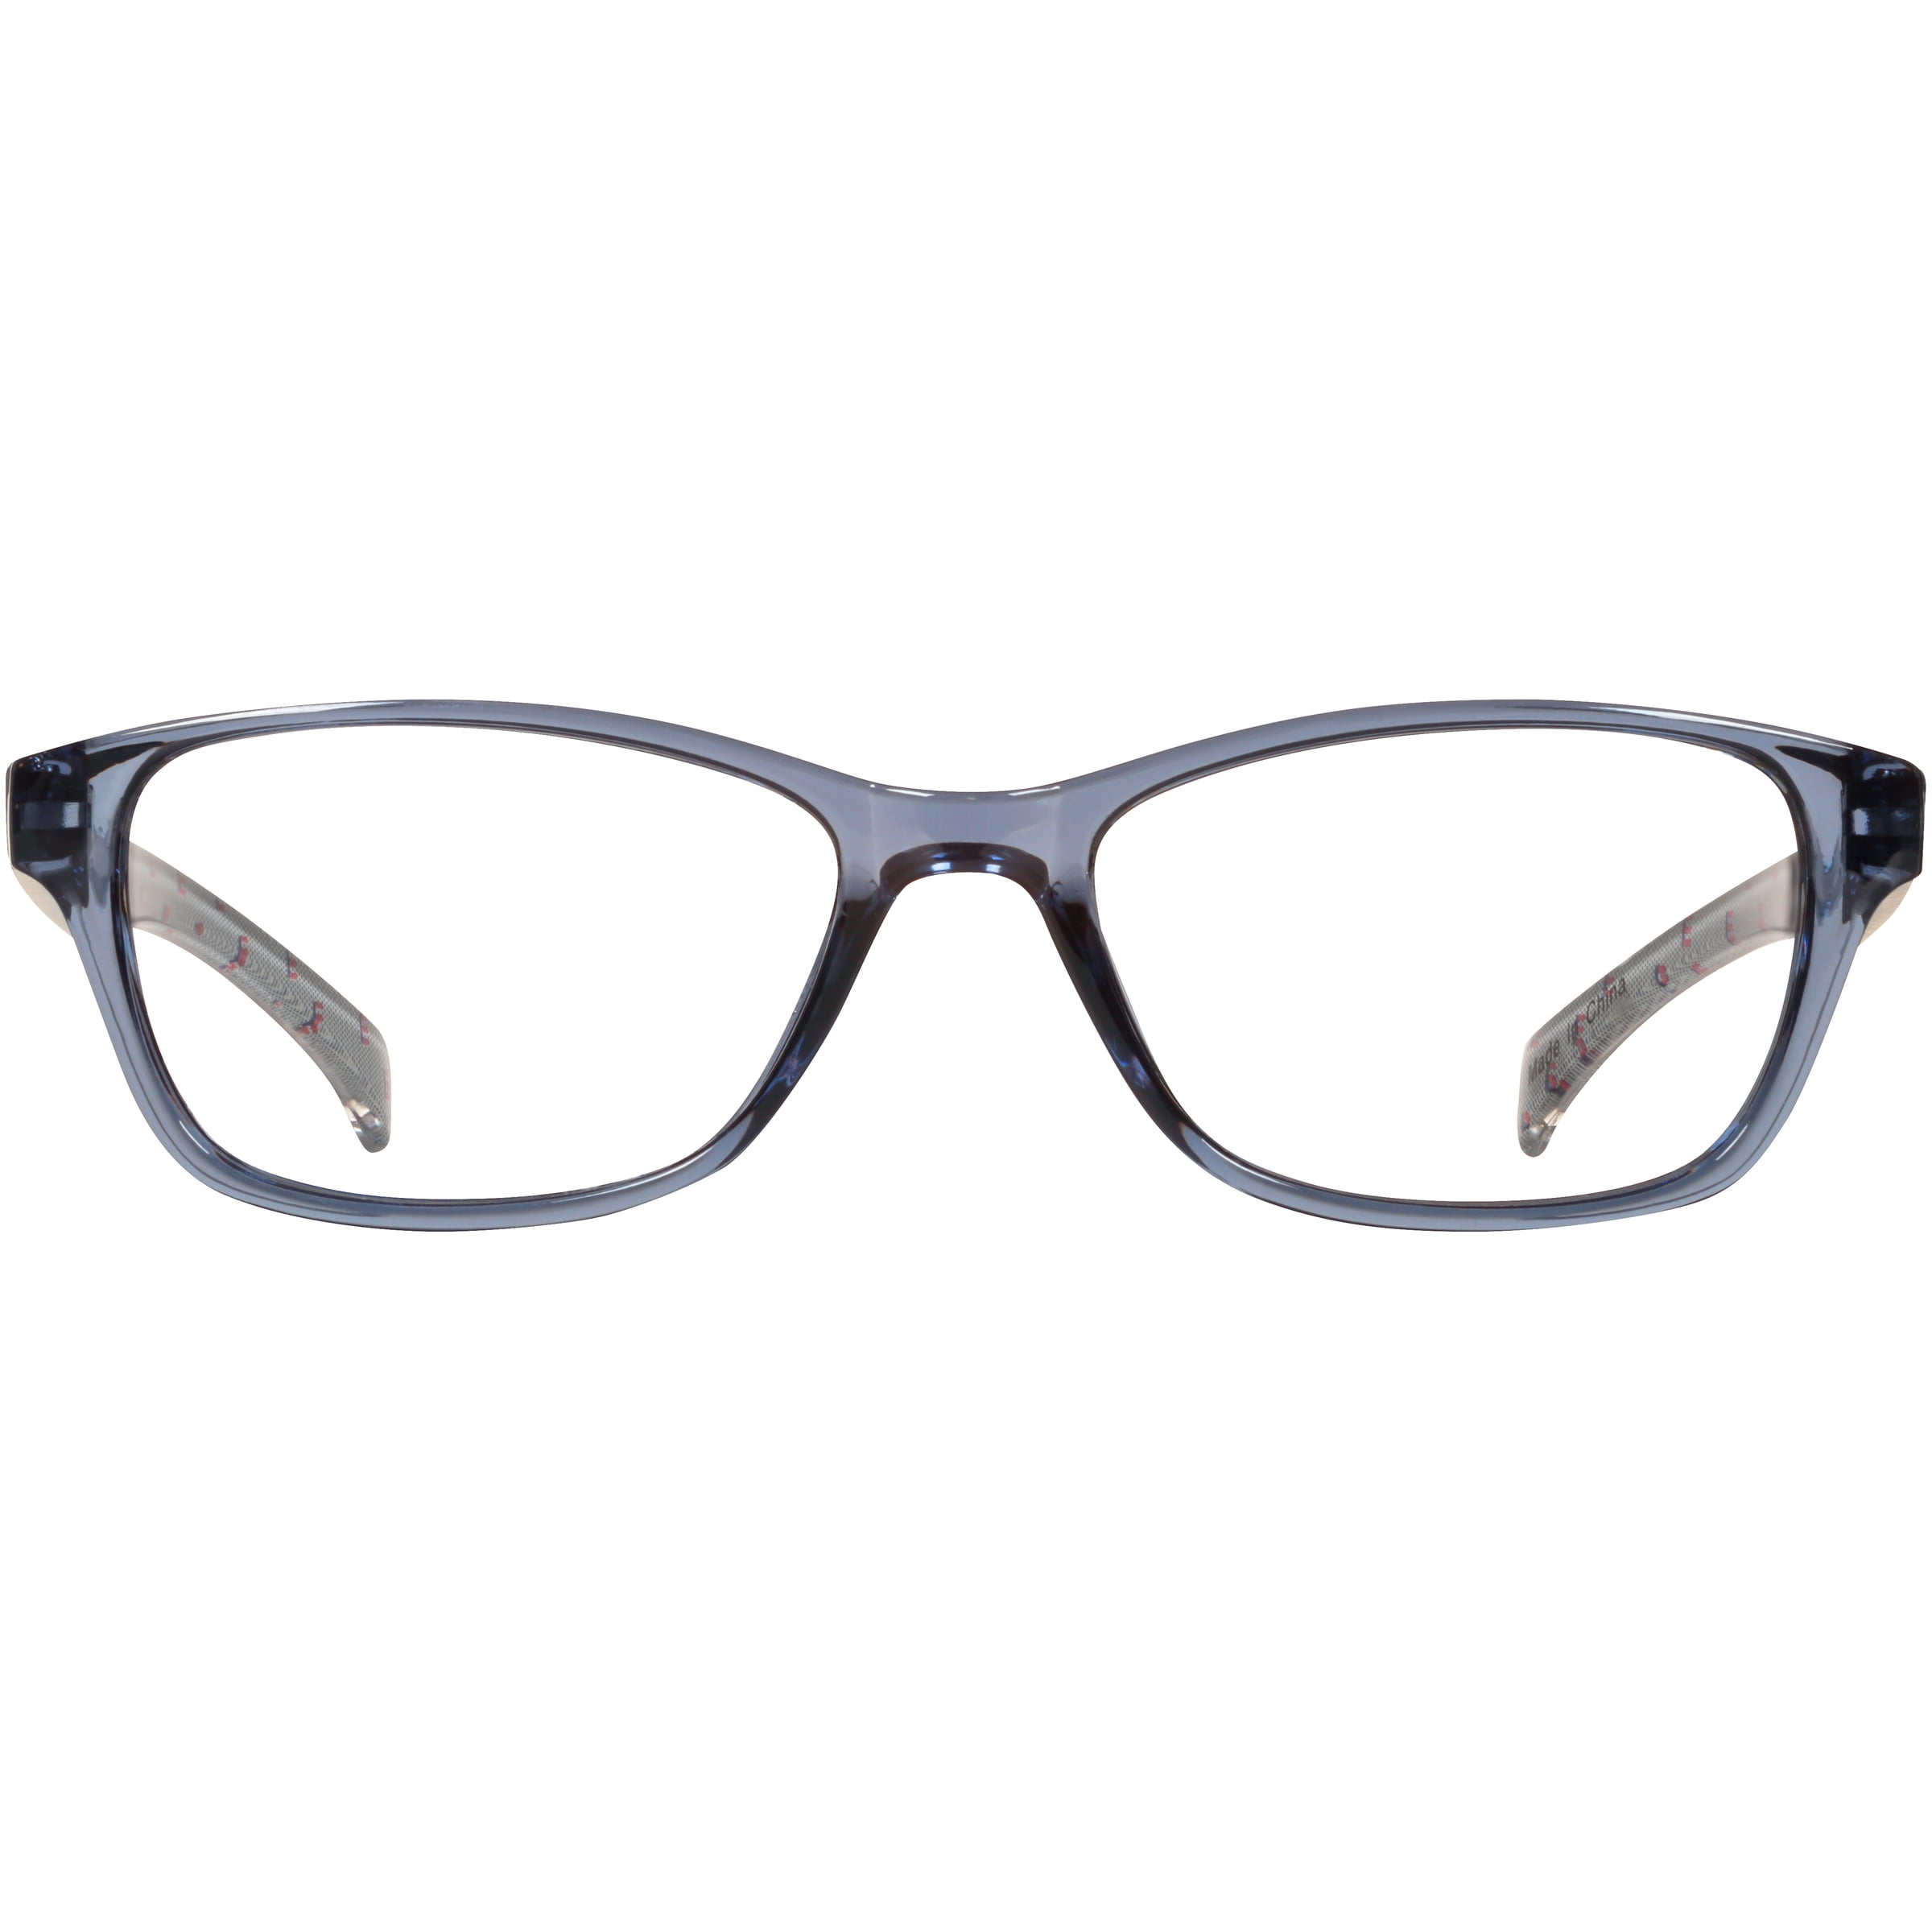 EV1 Nola Crystal Blue +3.00 Reading Glasses with Case